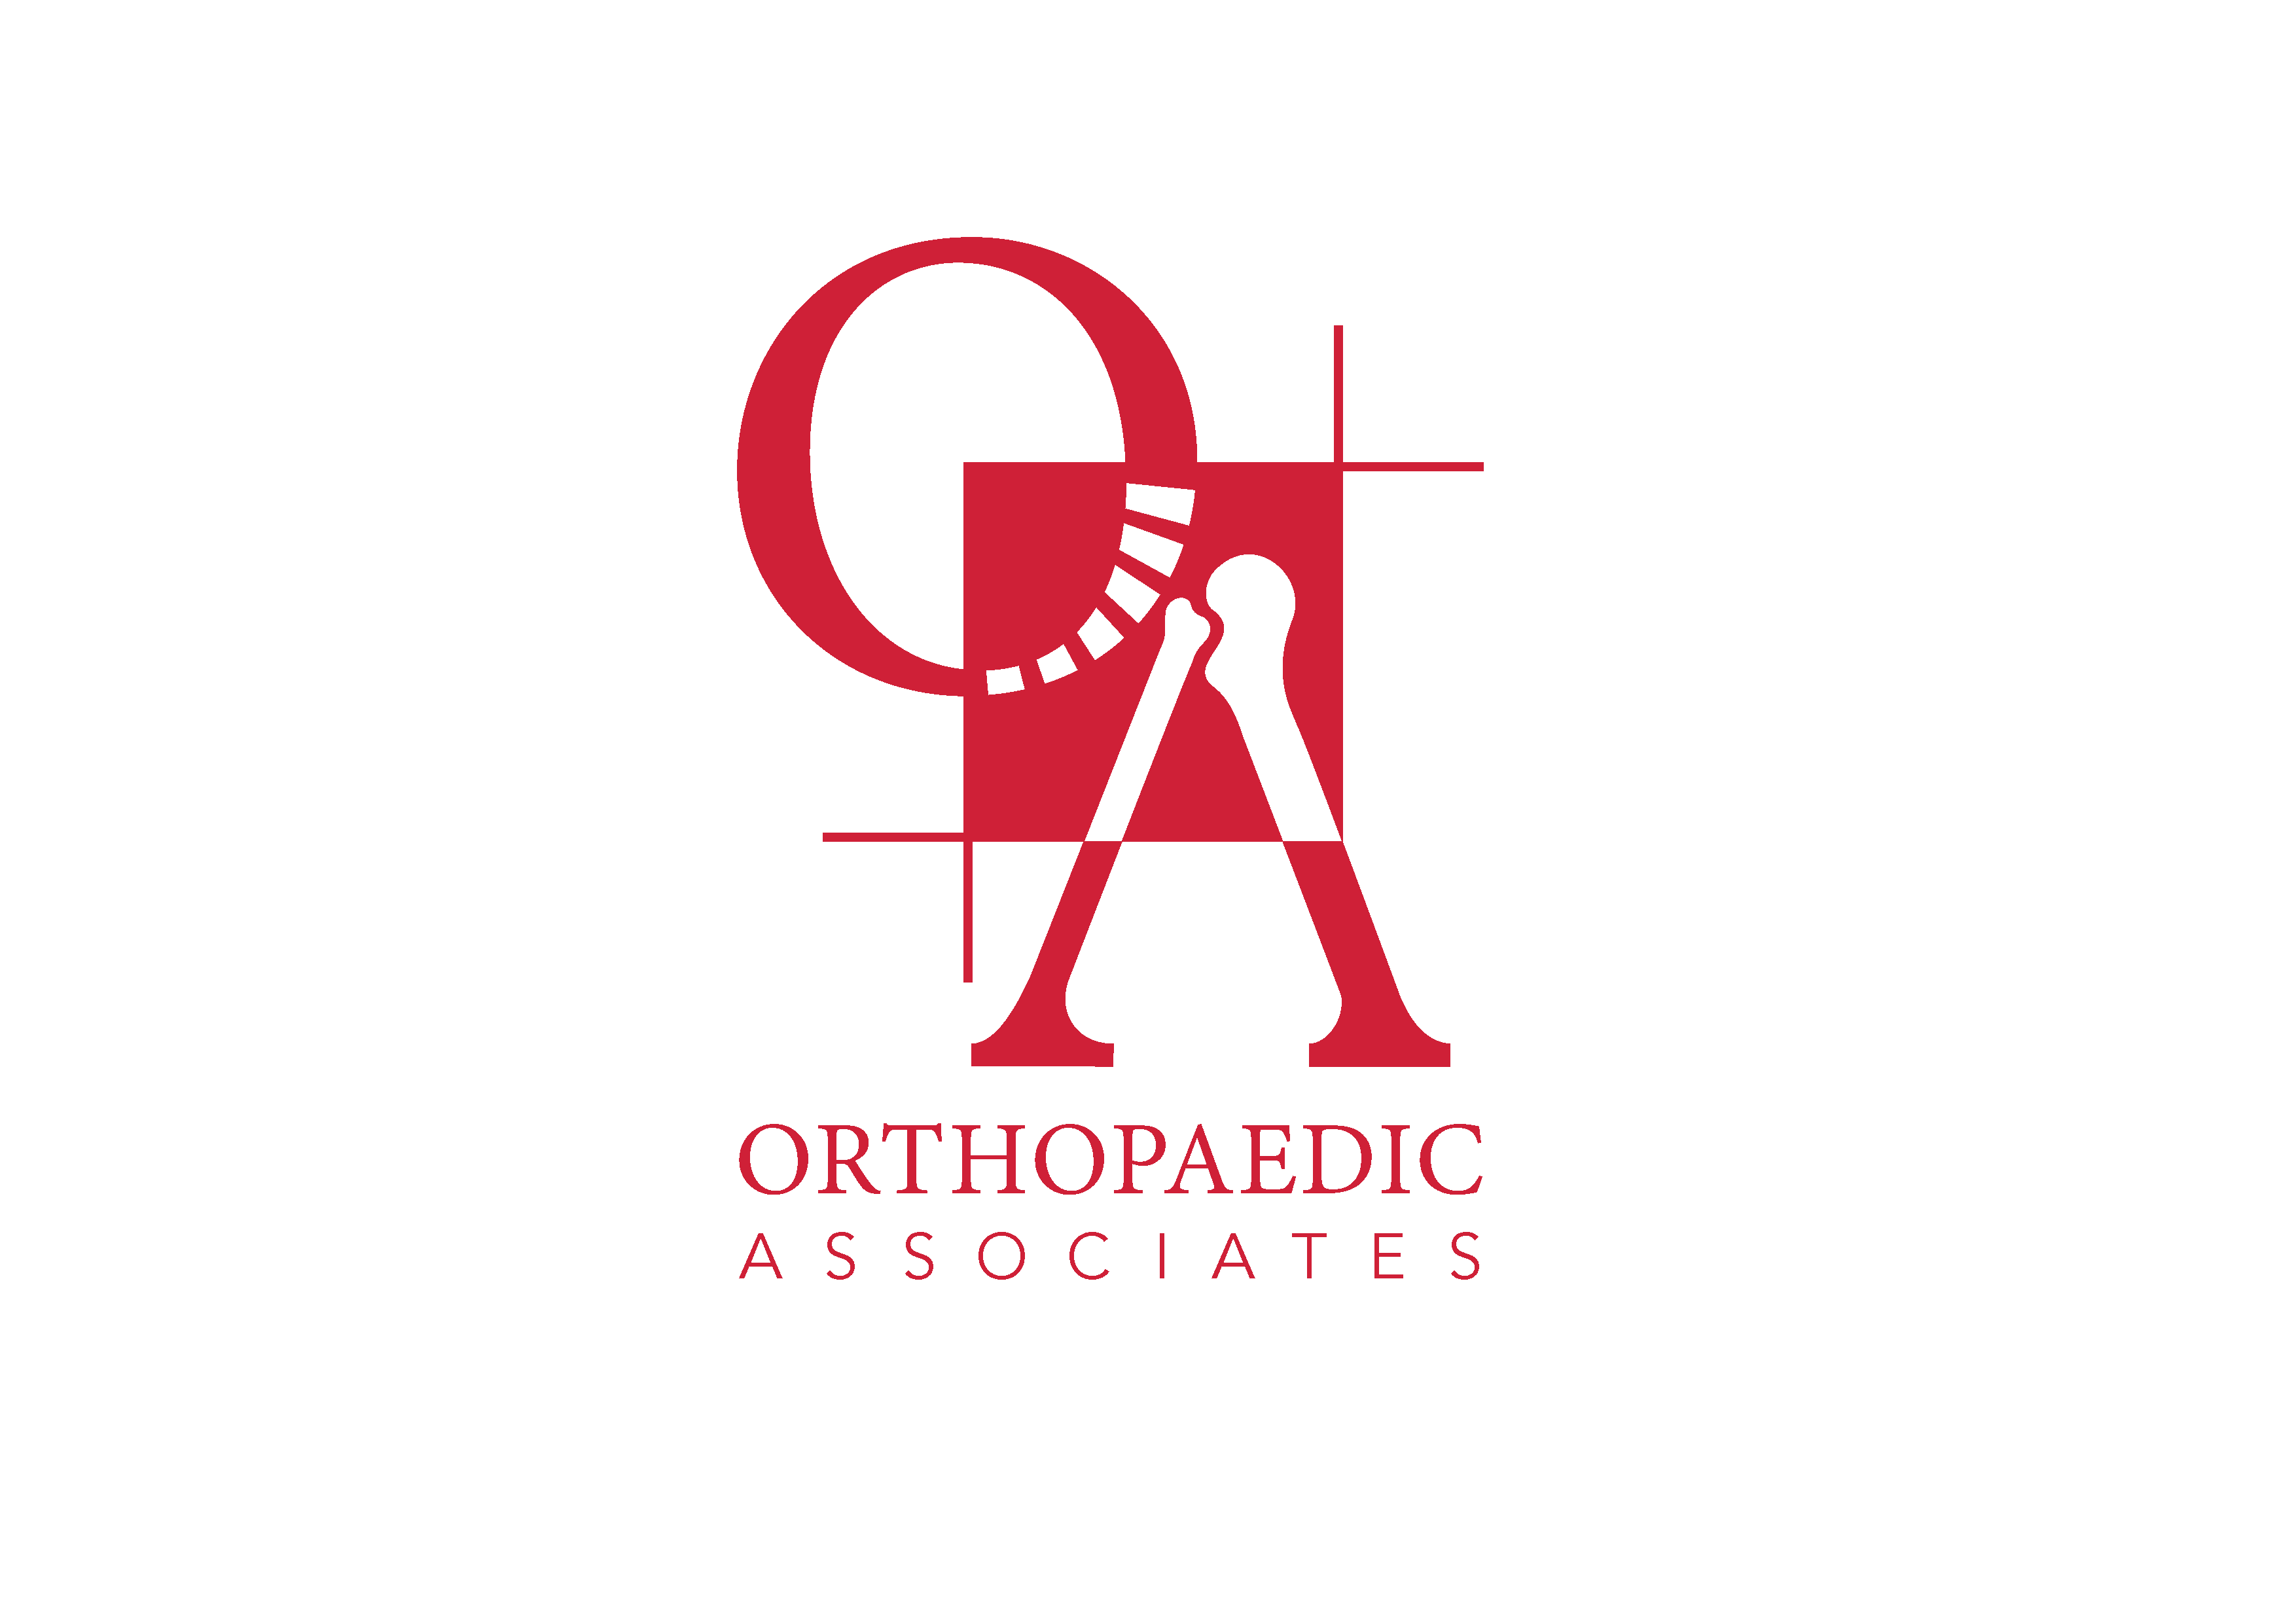 Orthopaedic Associates logo